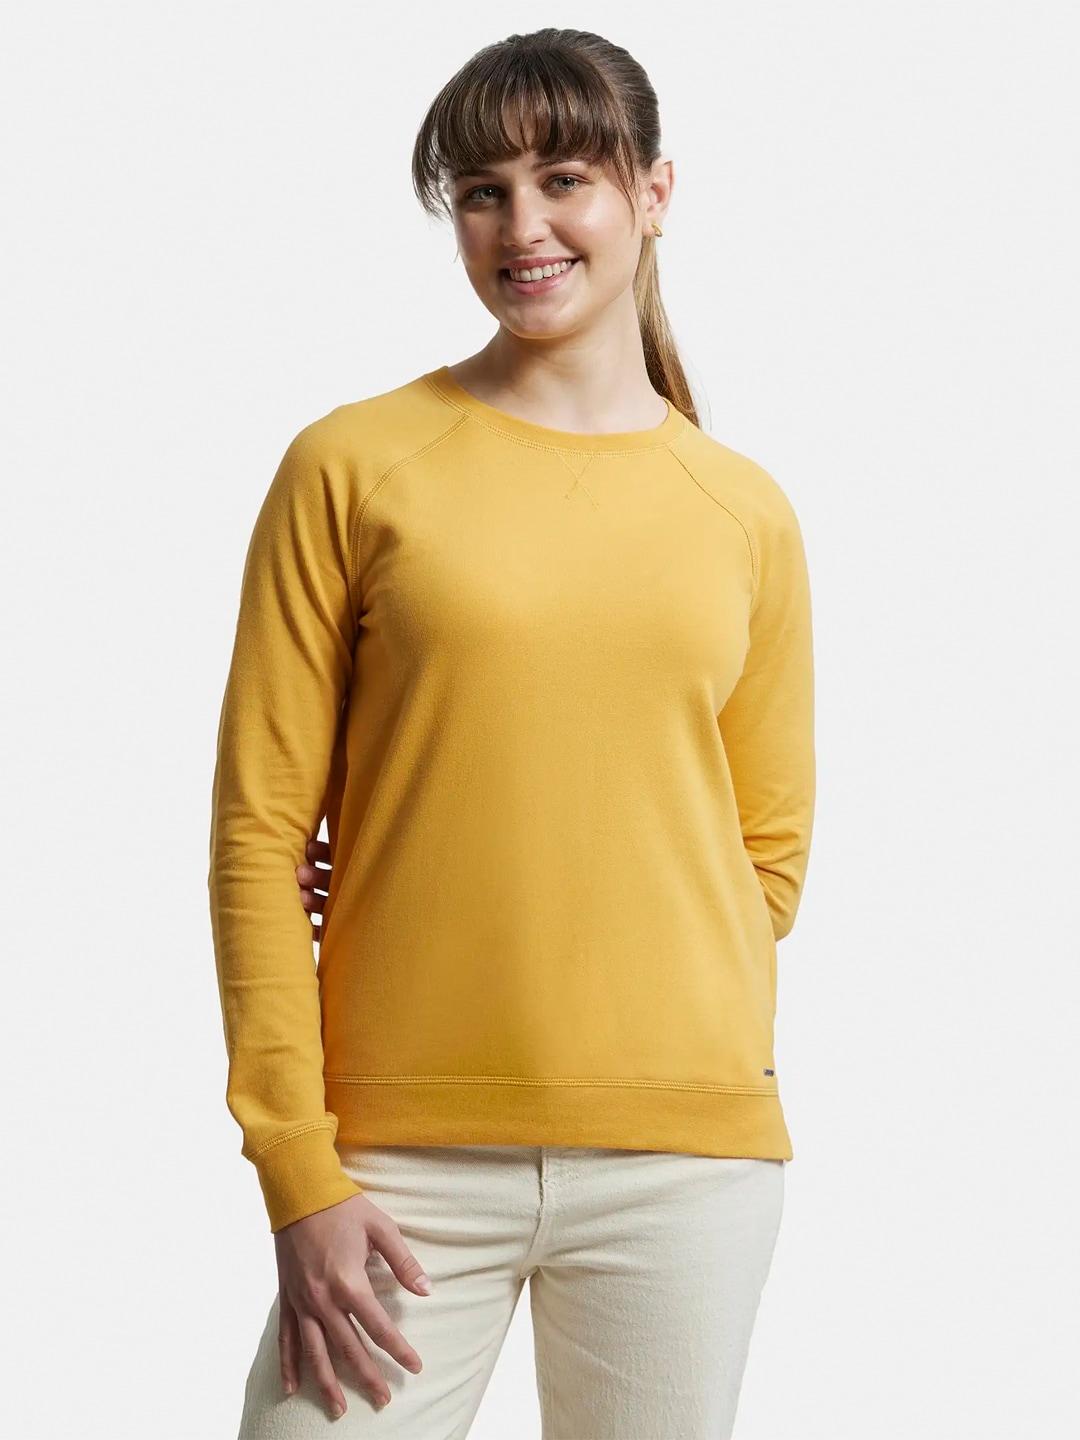 jockey women yellow sweatshirt